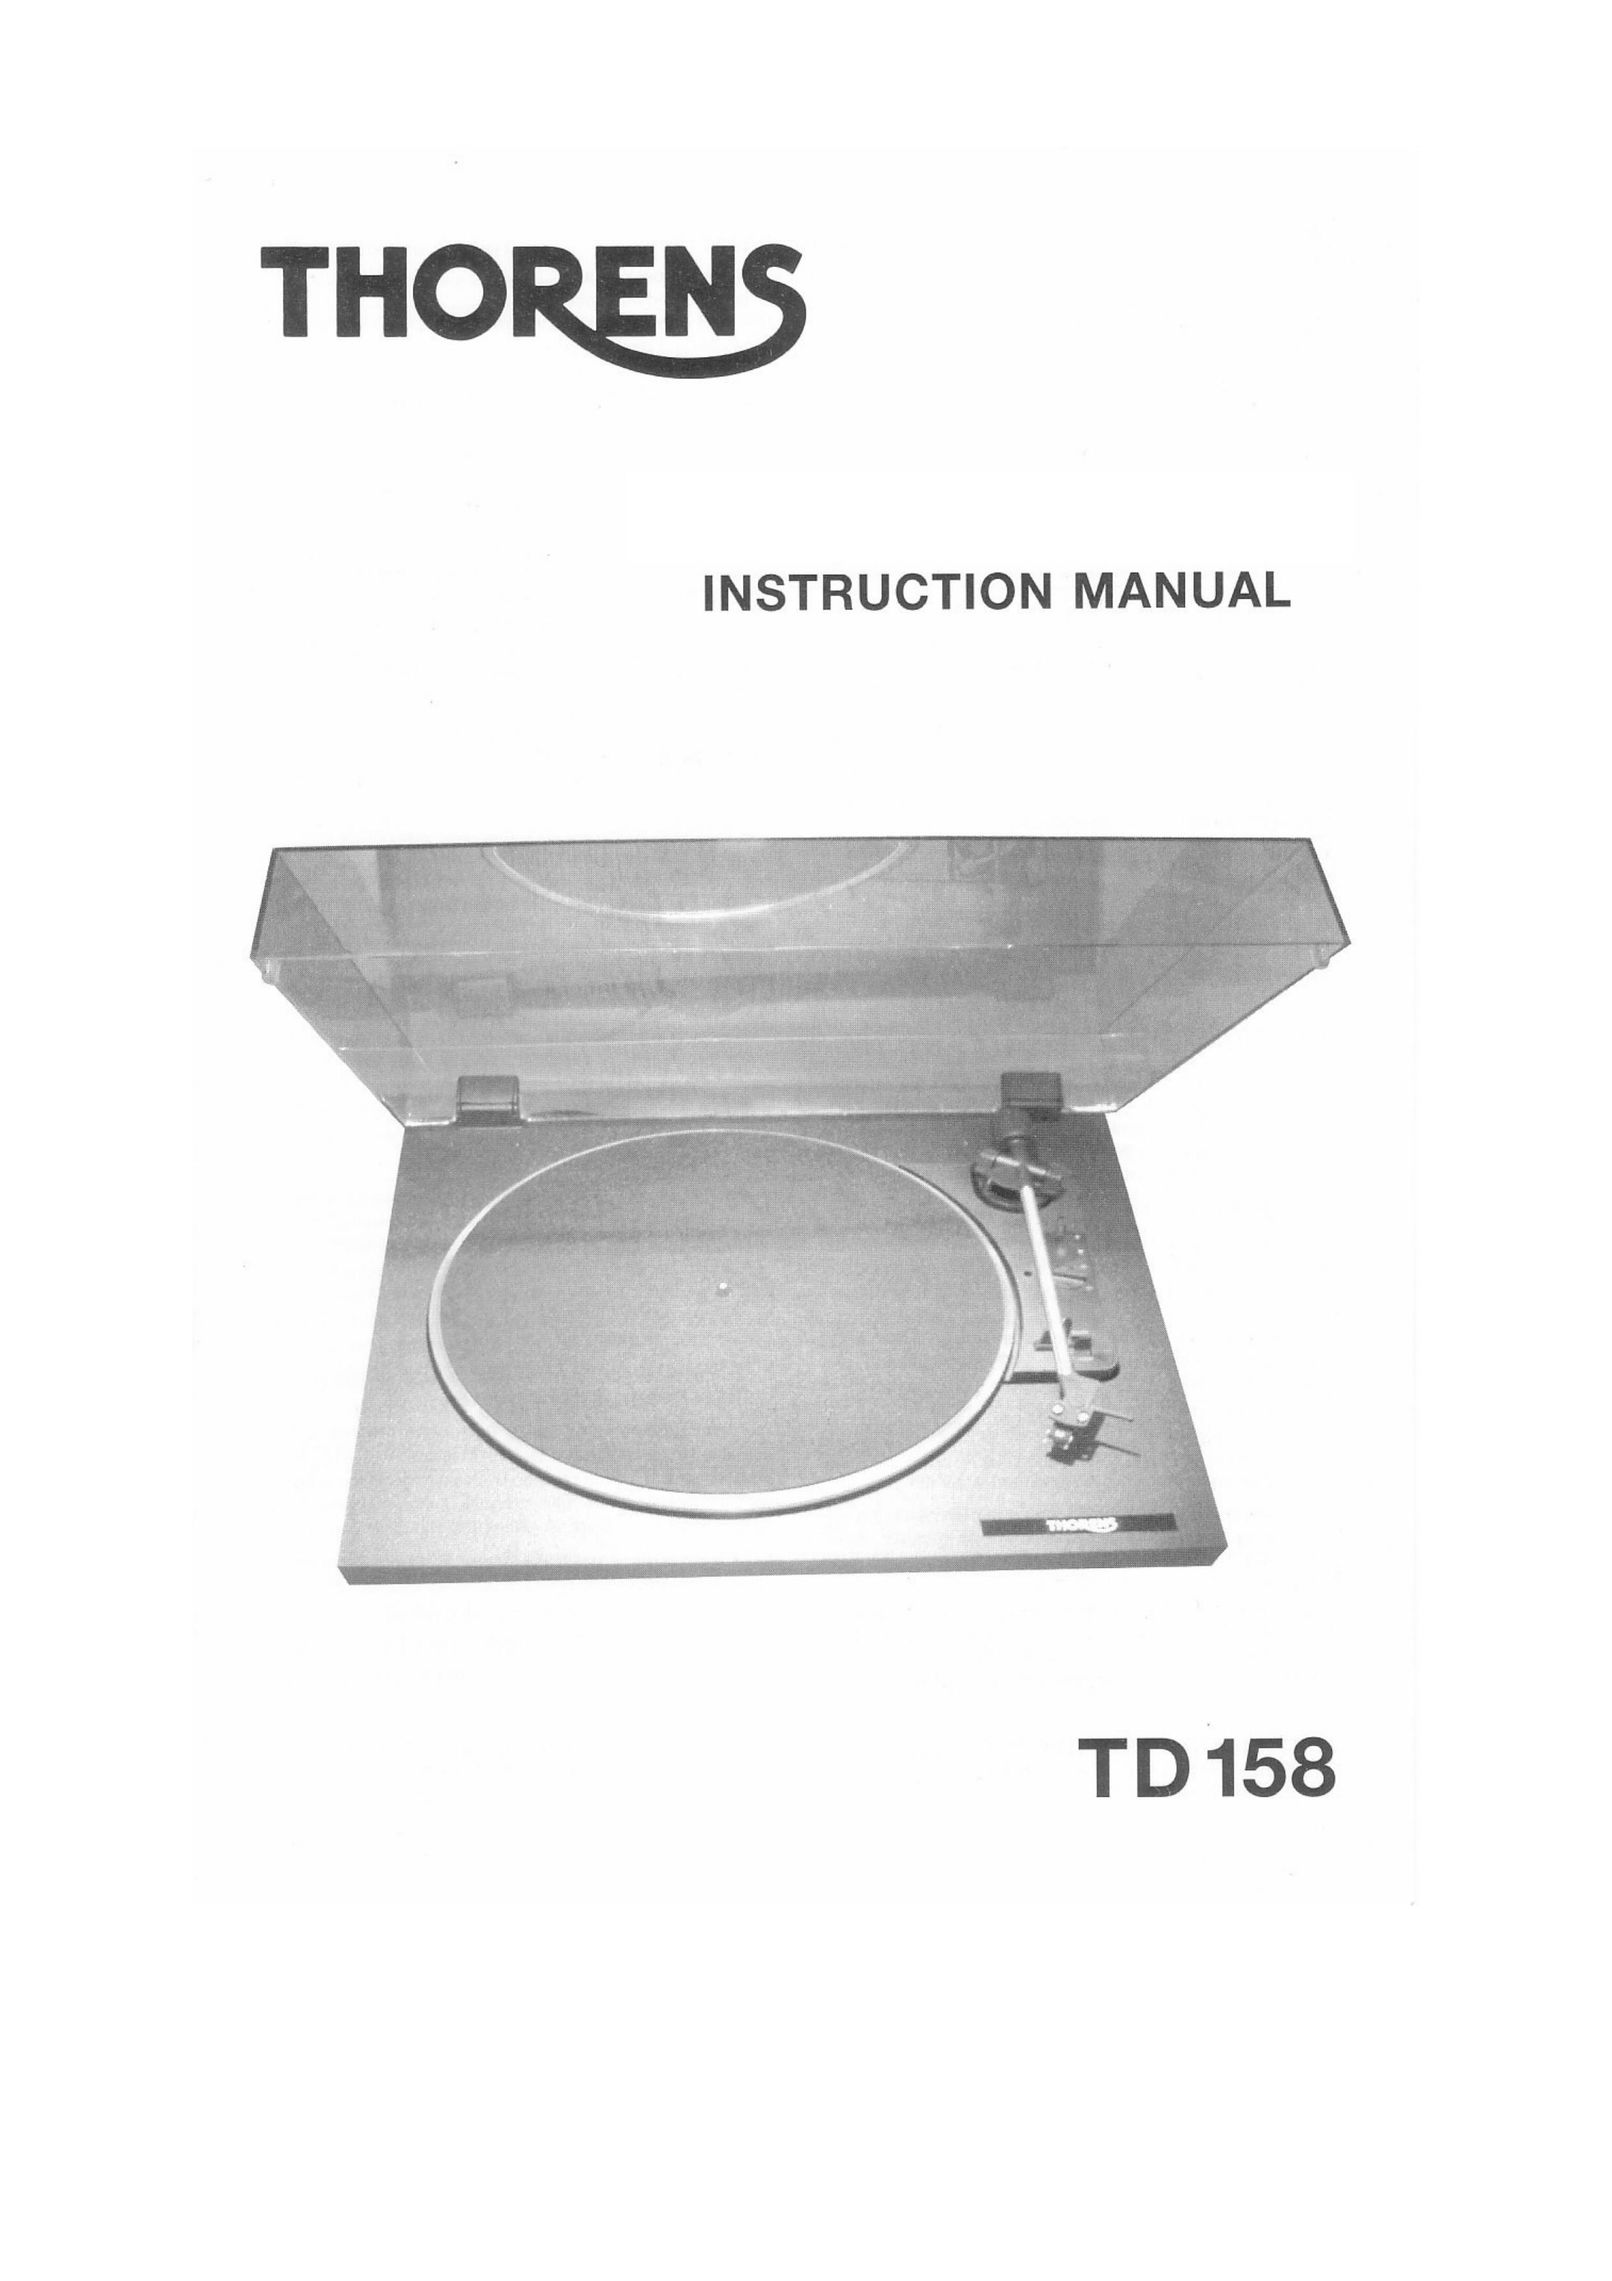 THORENS TD158 Turntable User Manual